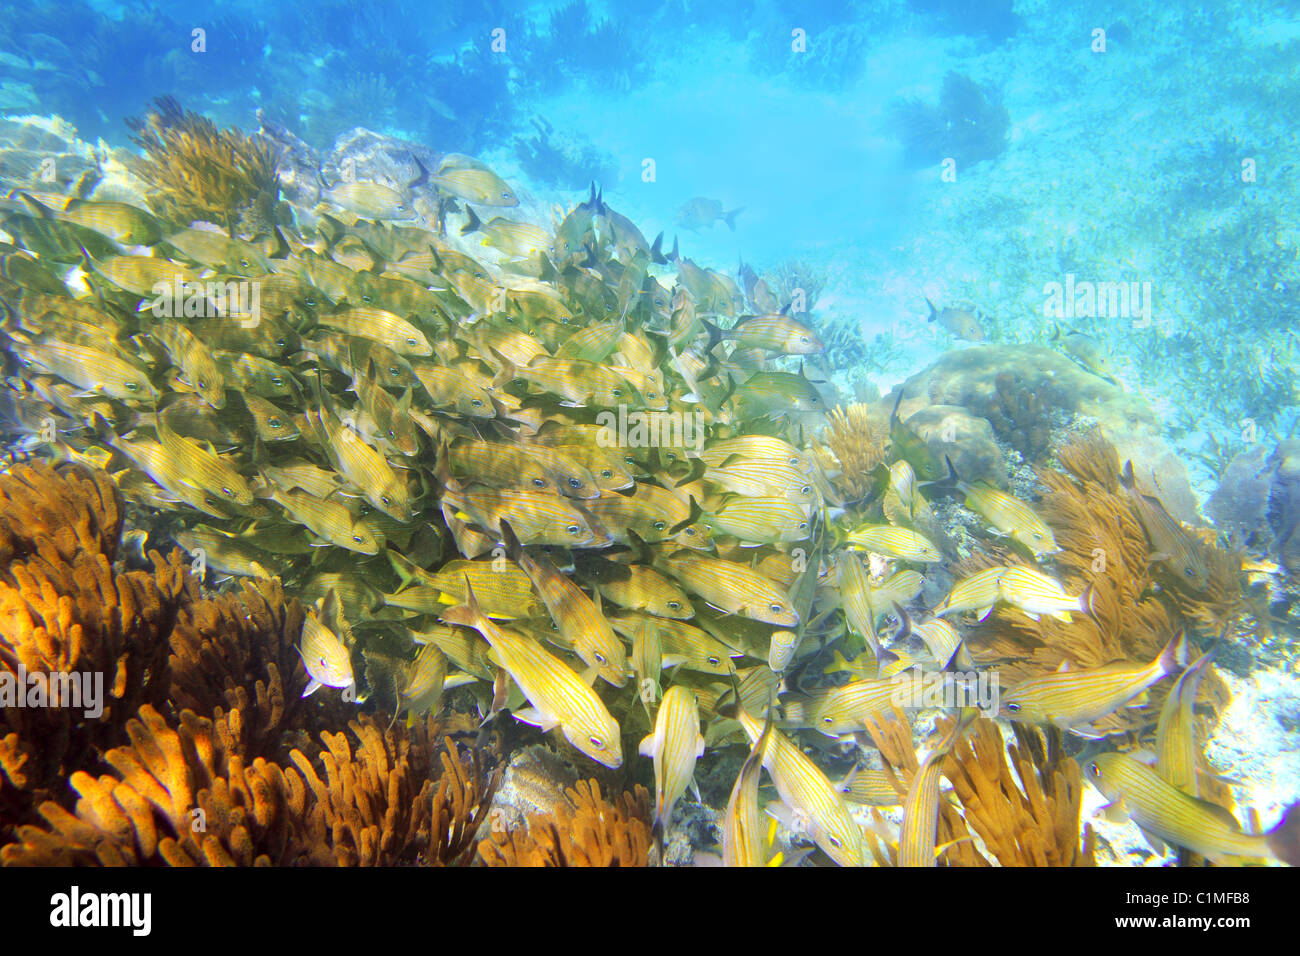 Caribbean sea reef yellow Grunt fish school Mayan Riviera mexico Haemulon flavolineatum Stock Photo